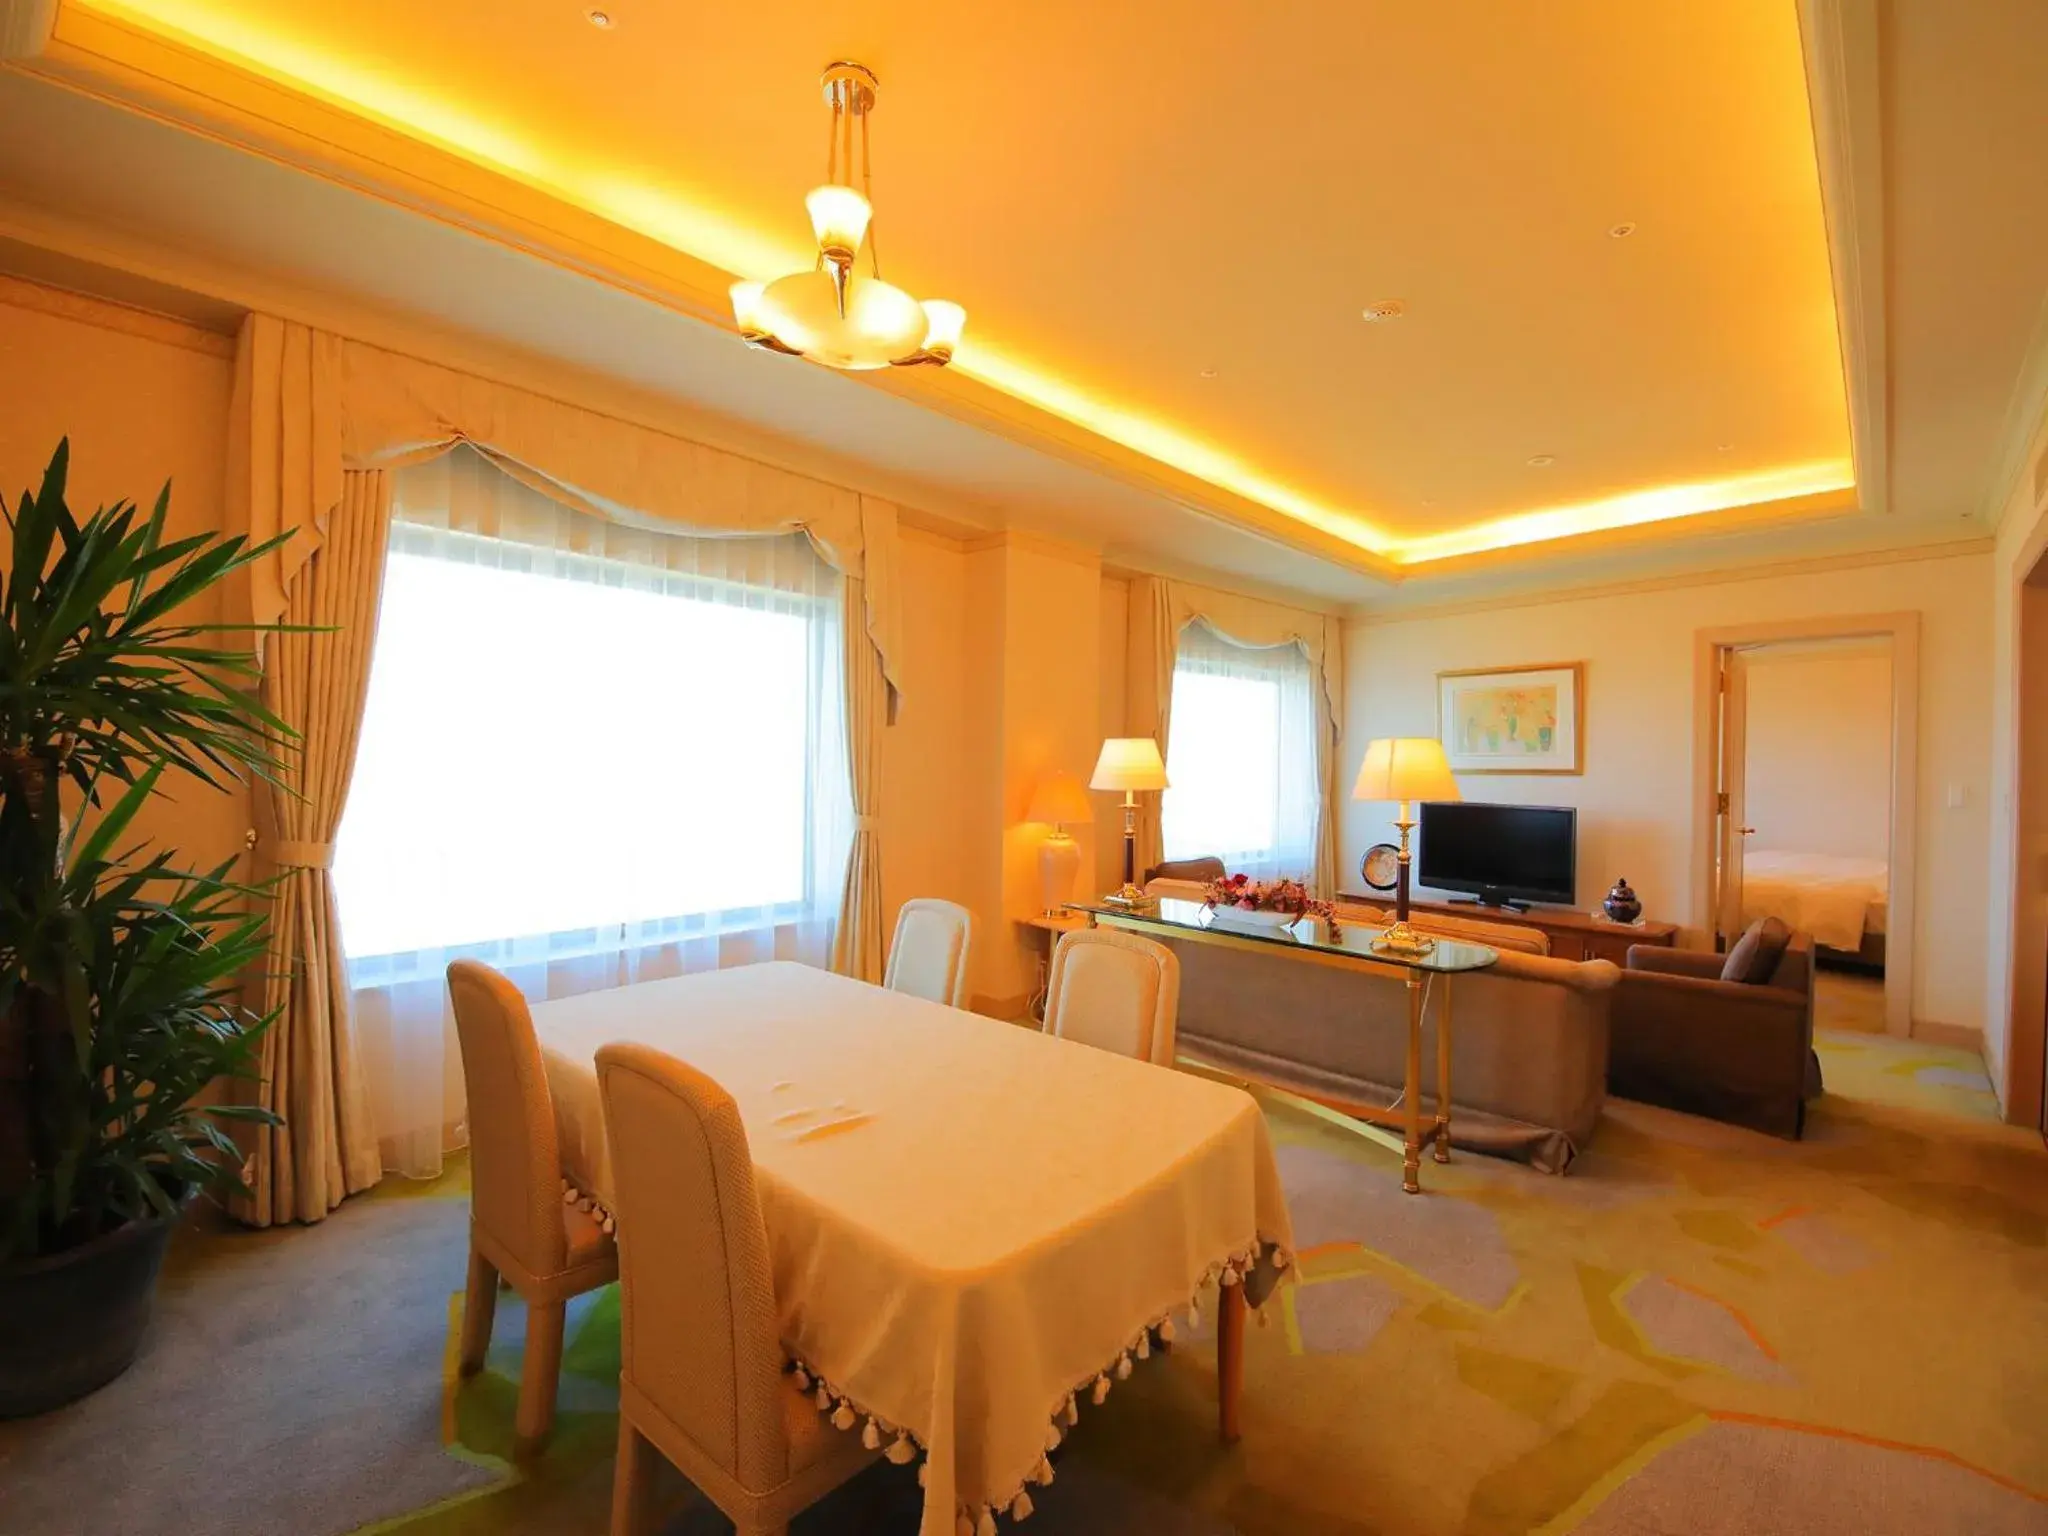 Photo of the whole room, Dining Area in Surfeel Hotel Wakkanai